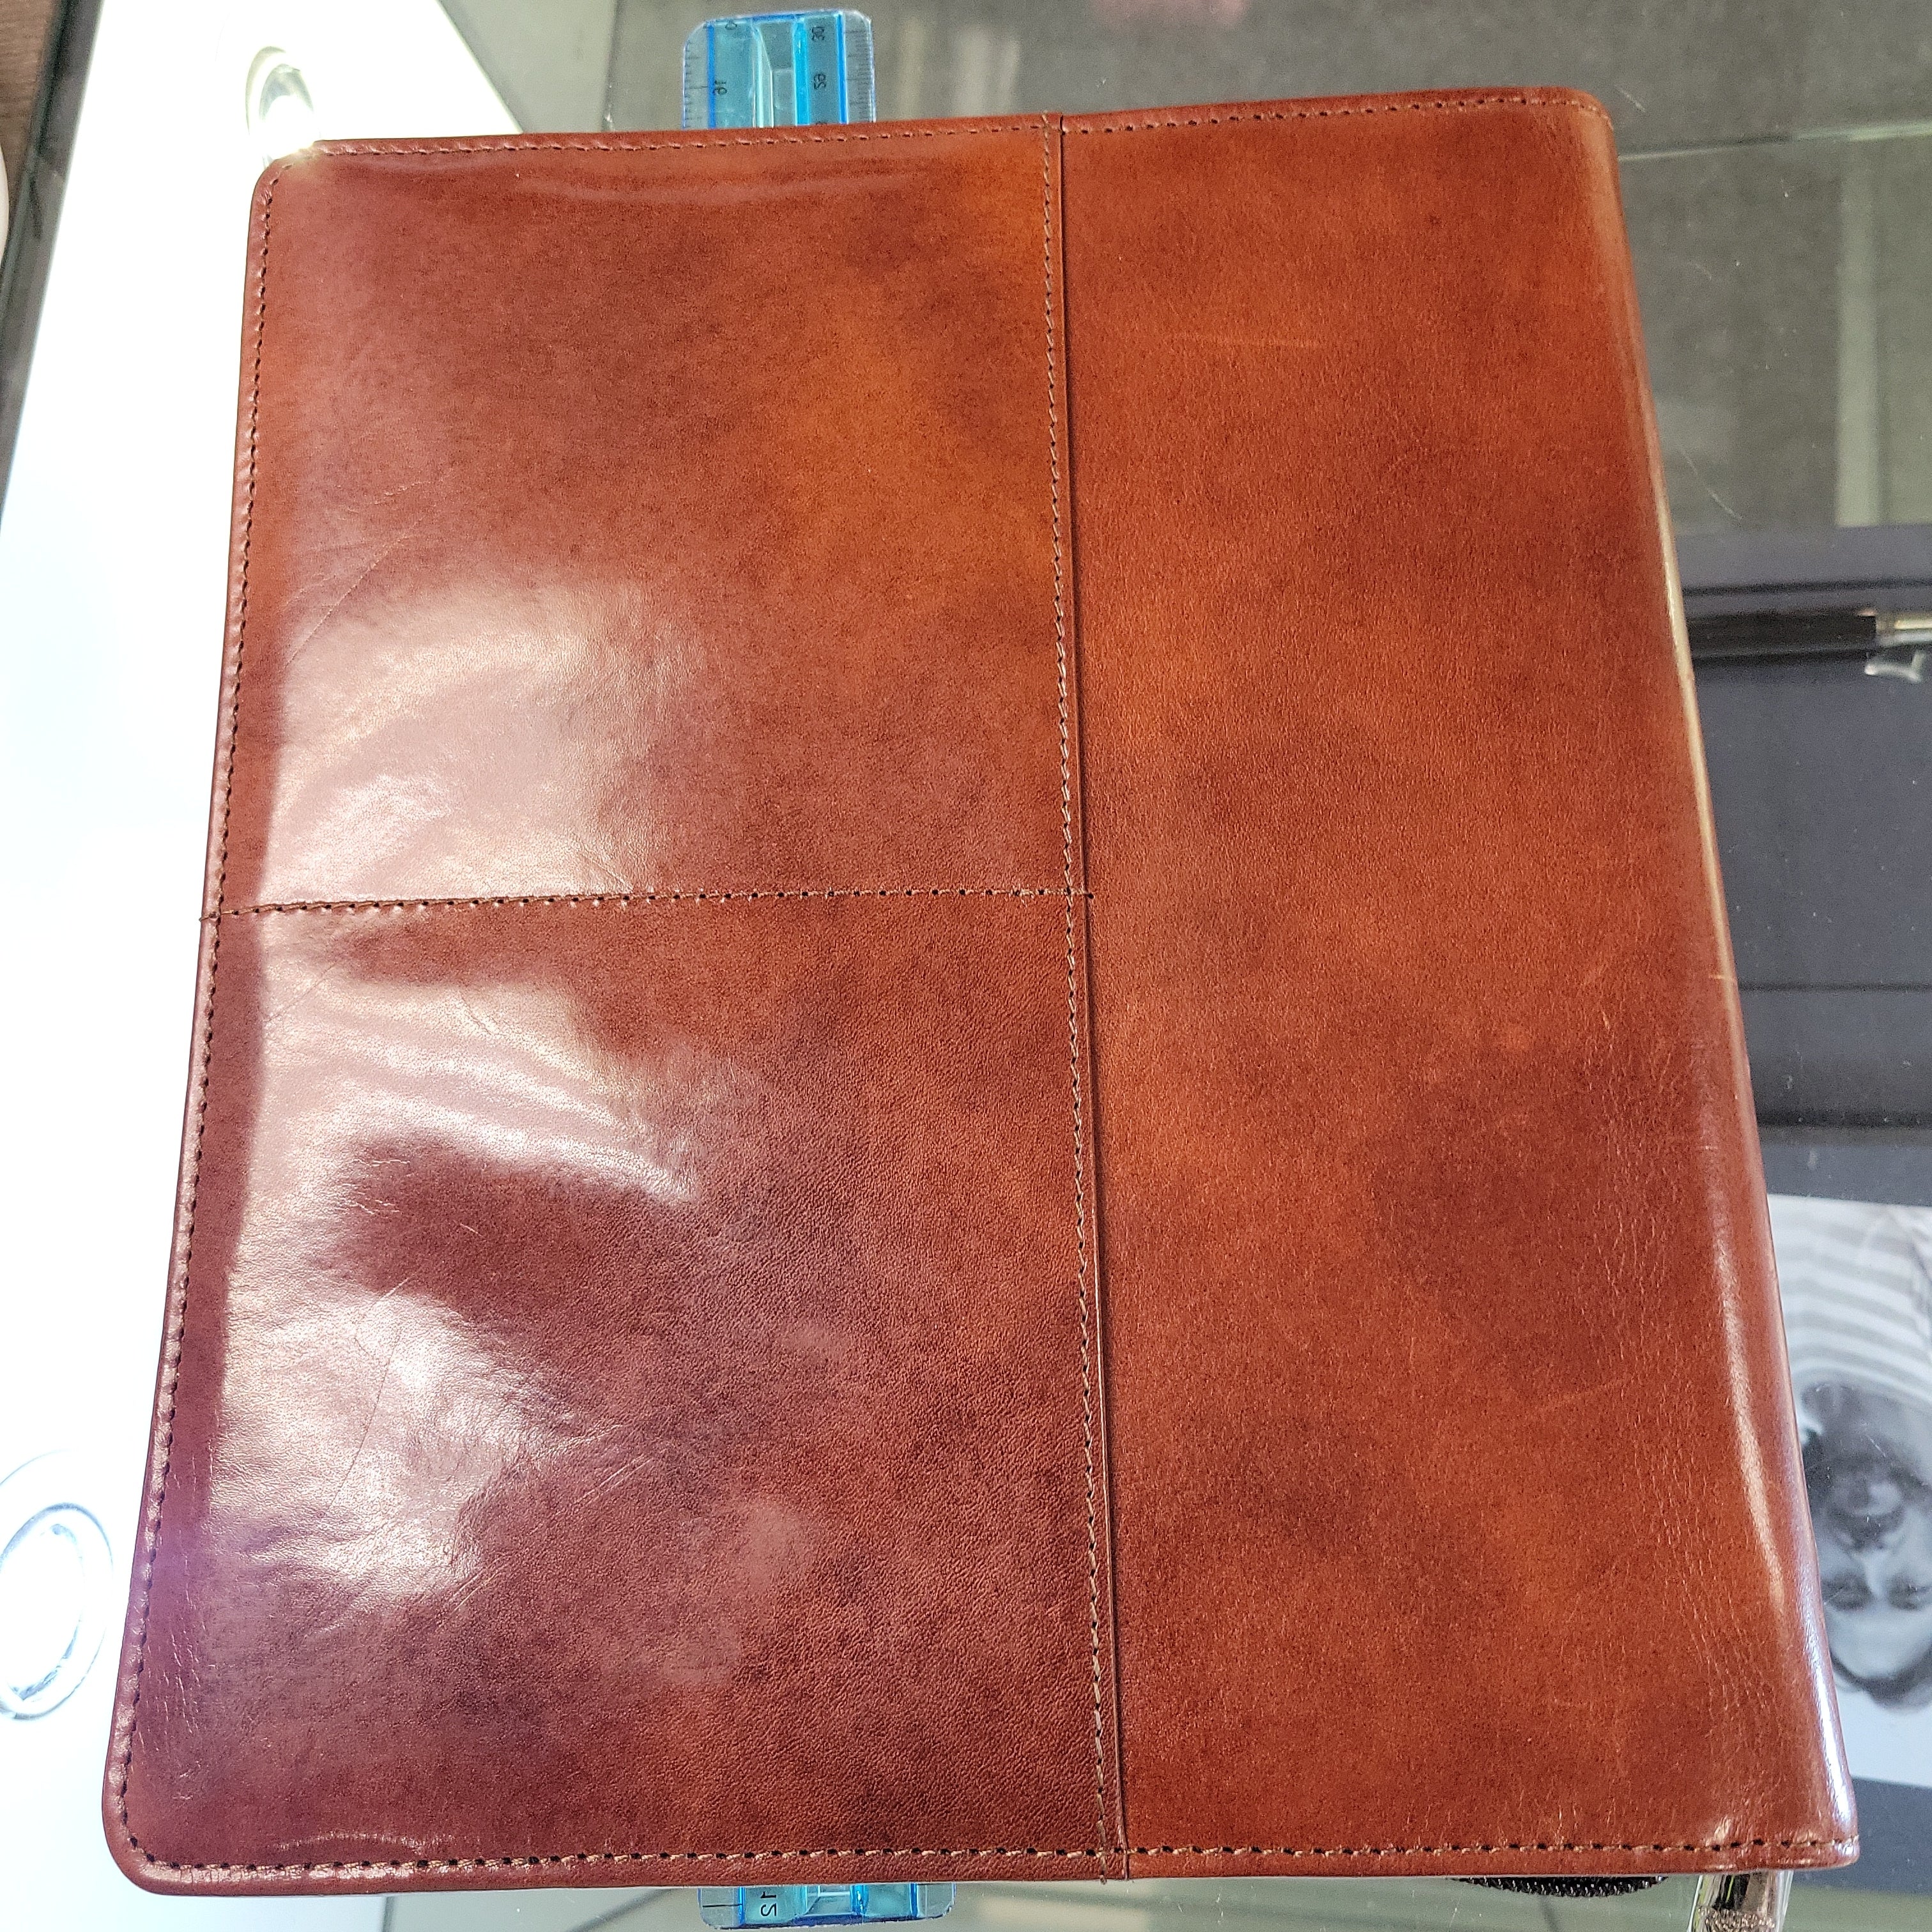 (Outlet) Bosca Leather Amber Zip Around iPad Case-Pen Boutique Ltd